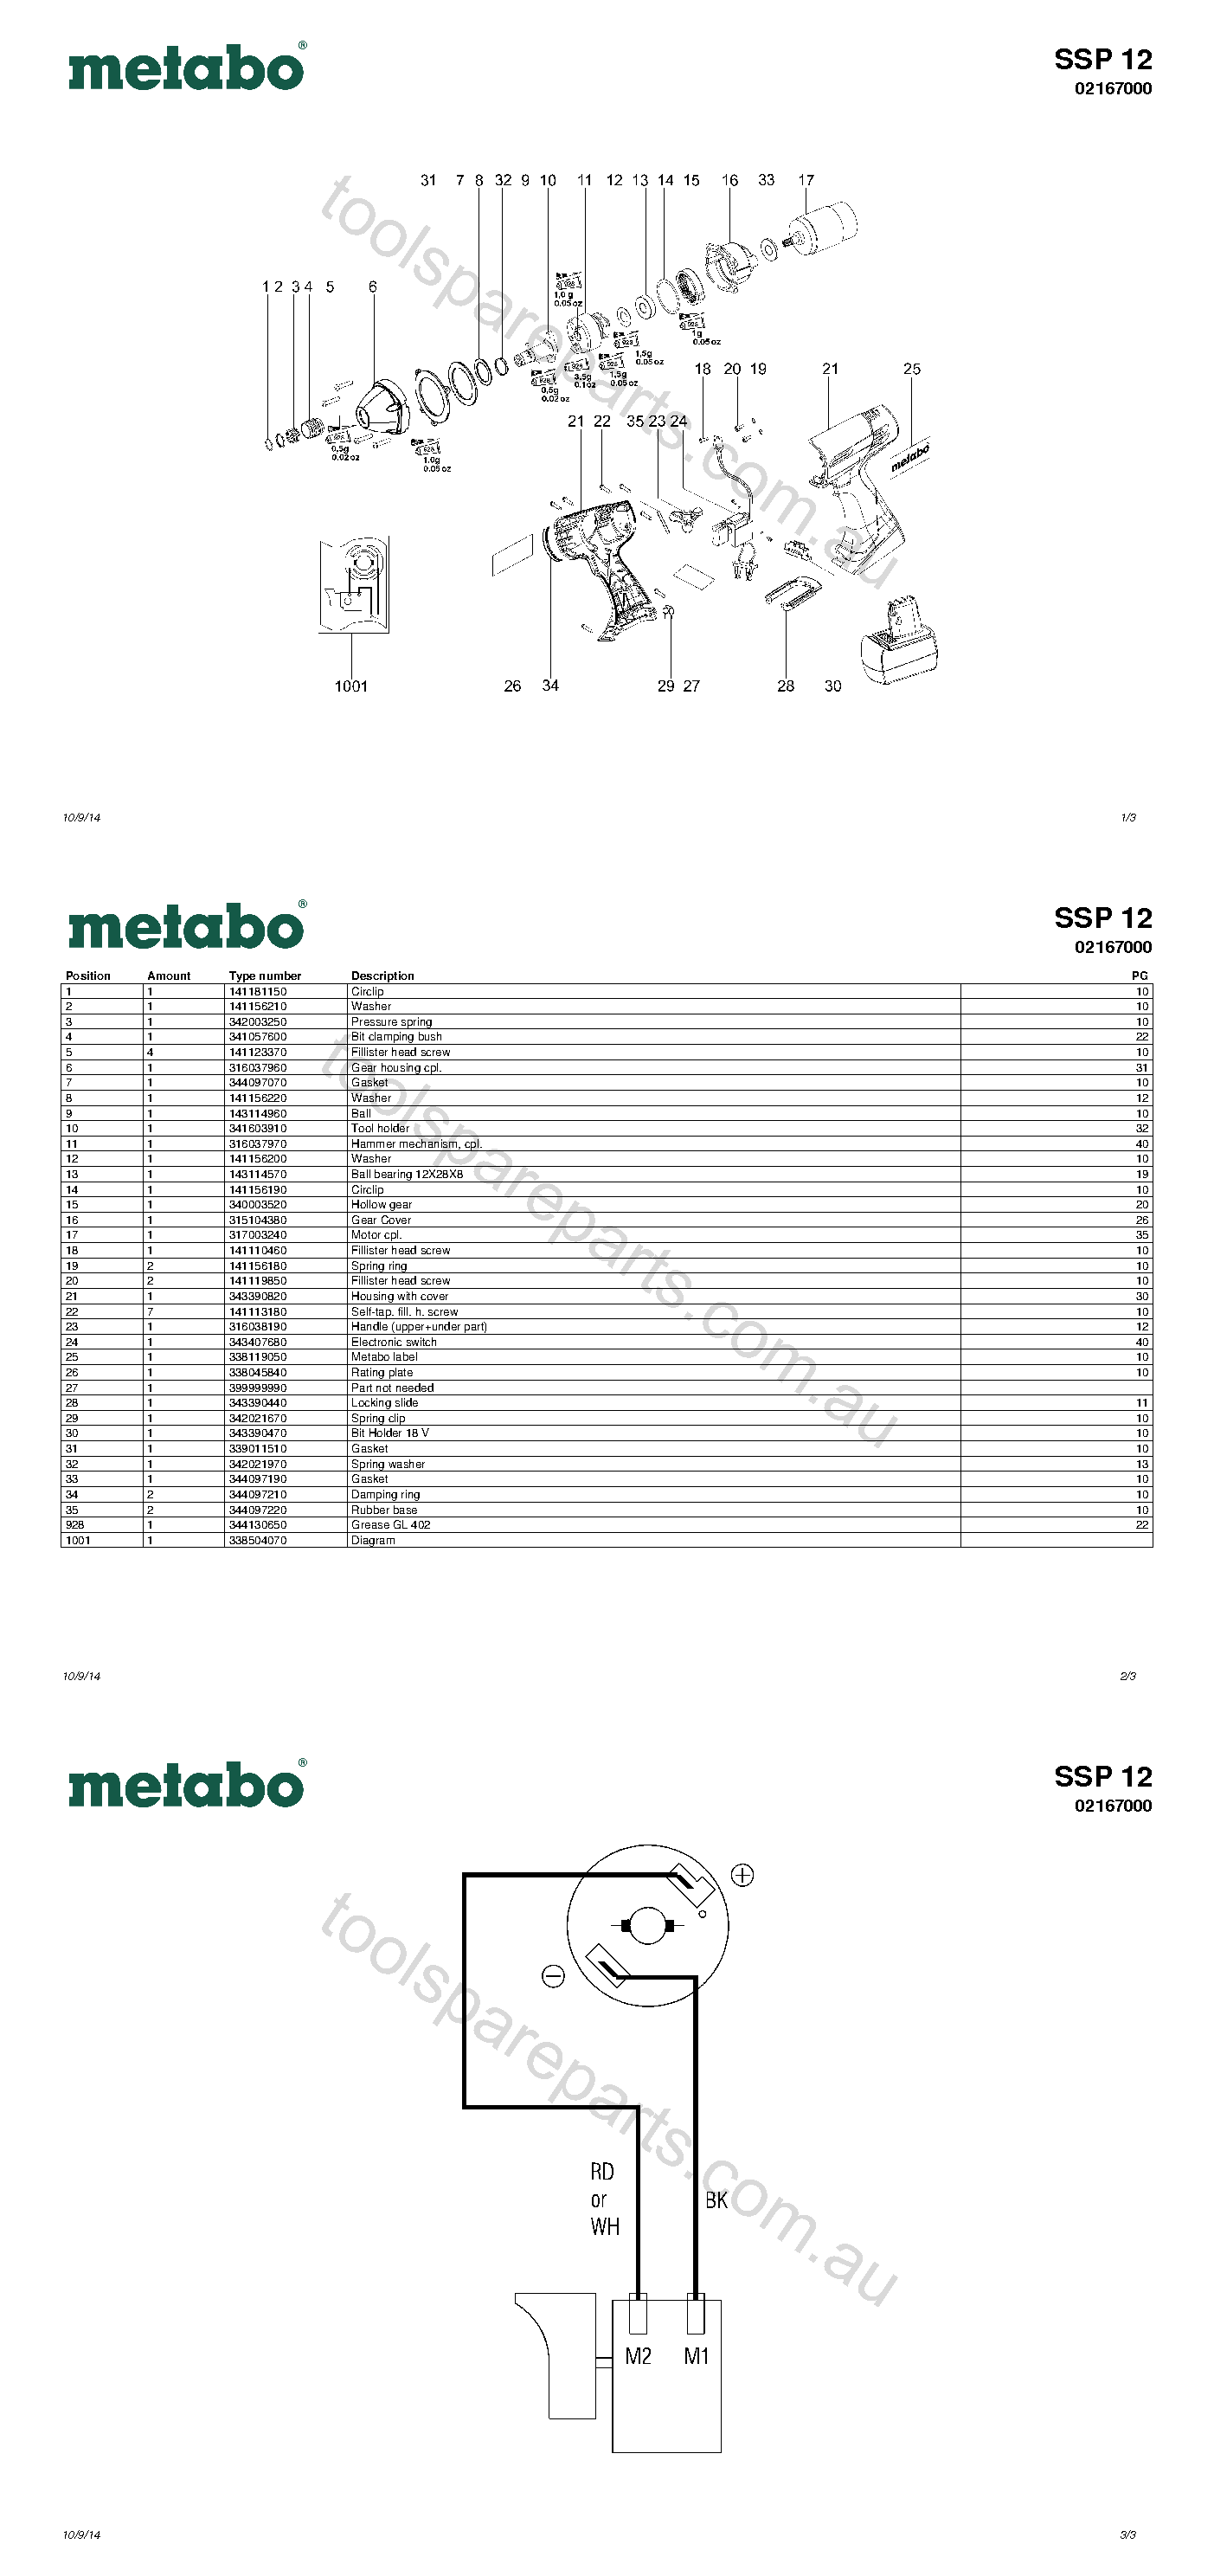 Metabo SSP 12 02167000  Diagram 1